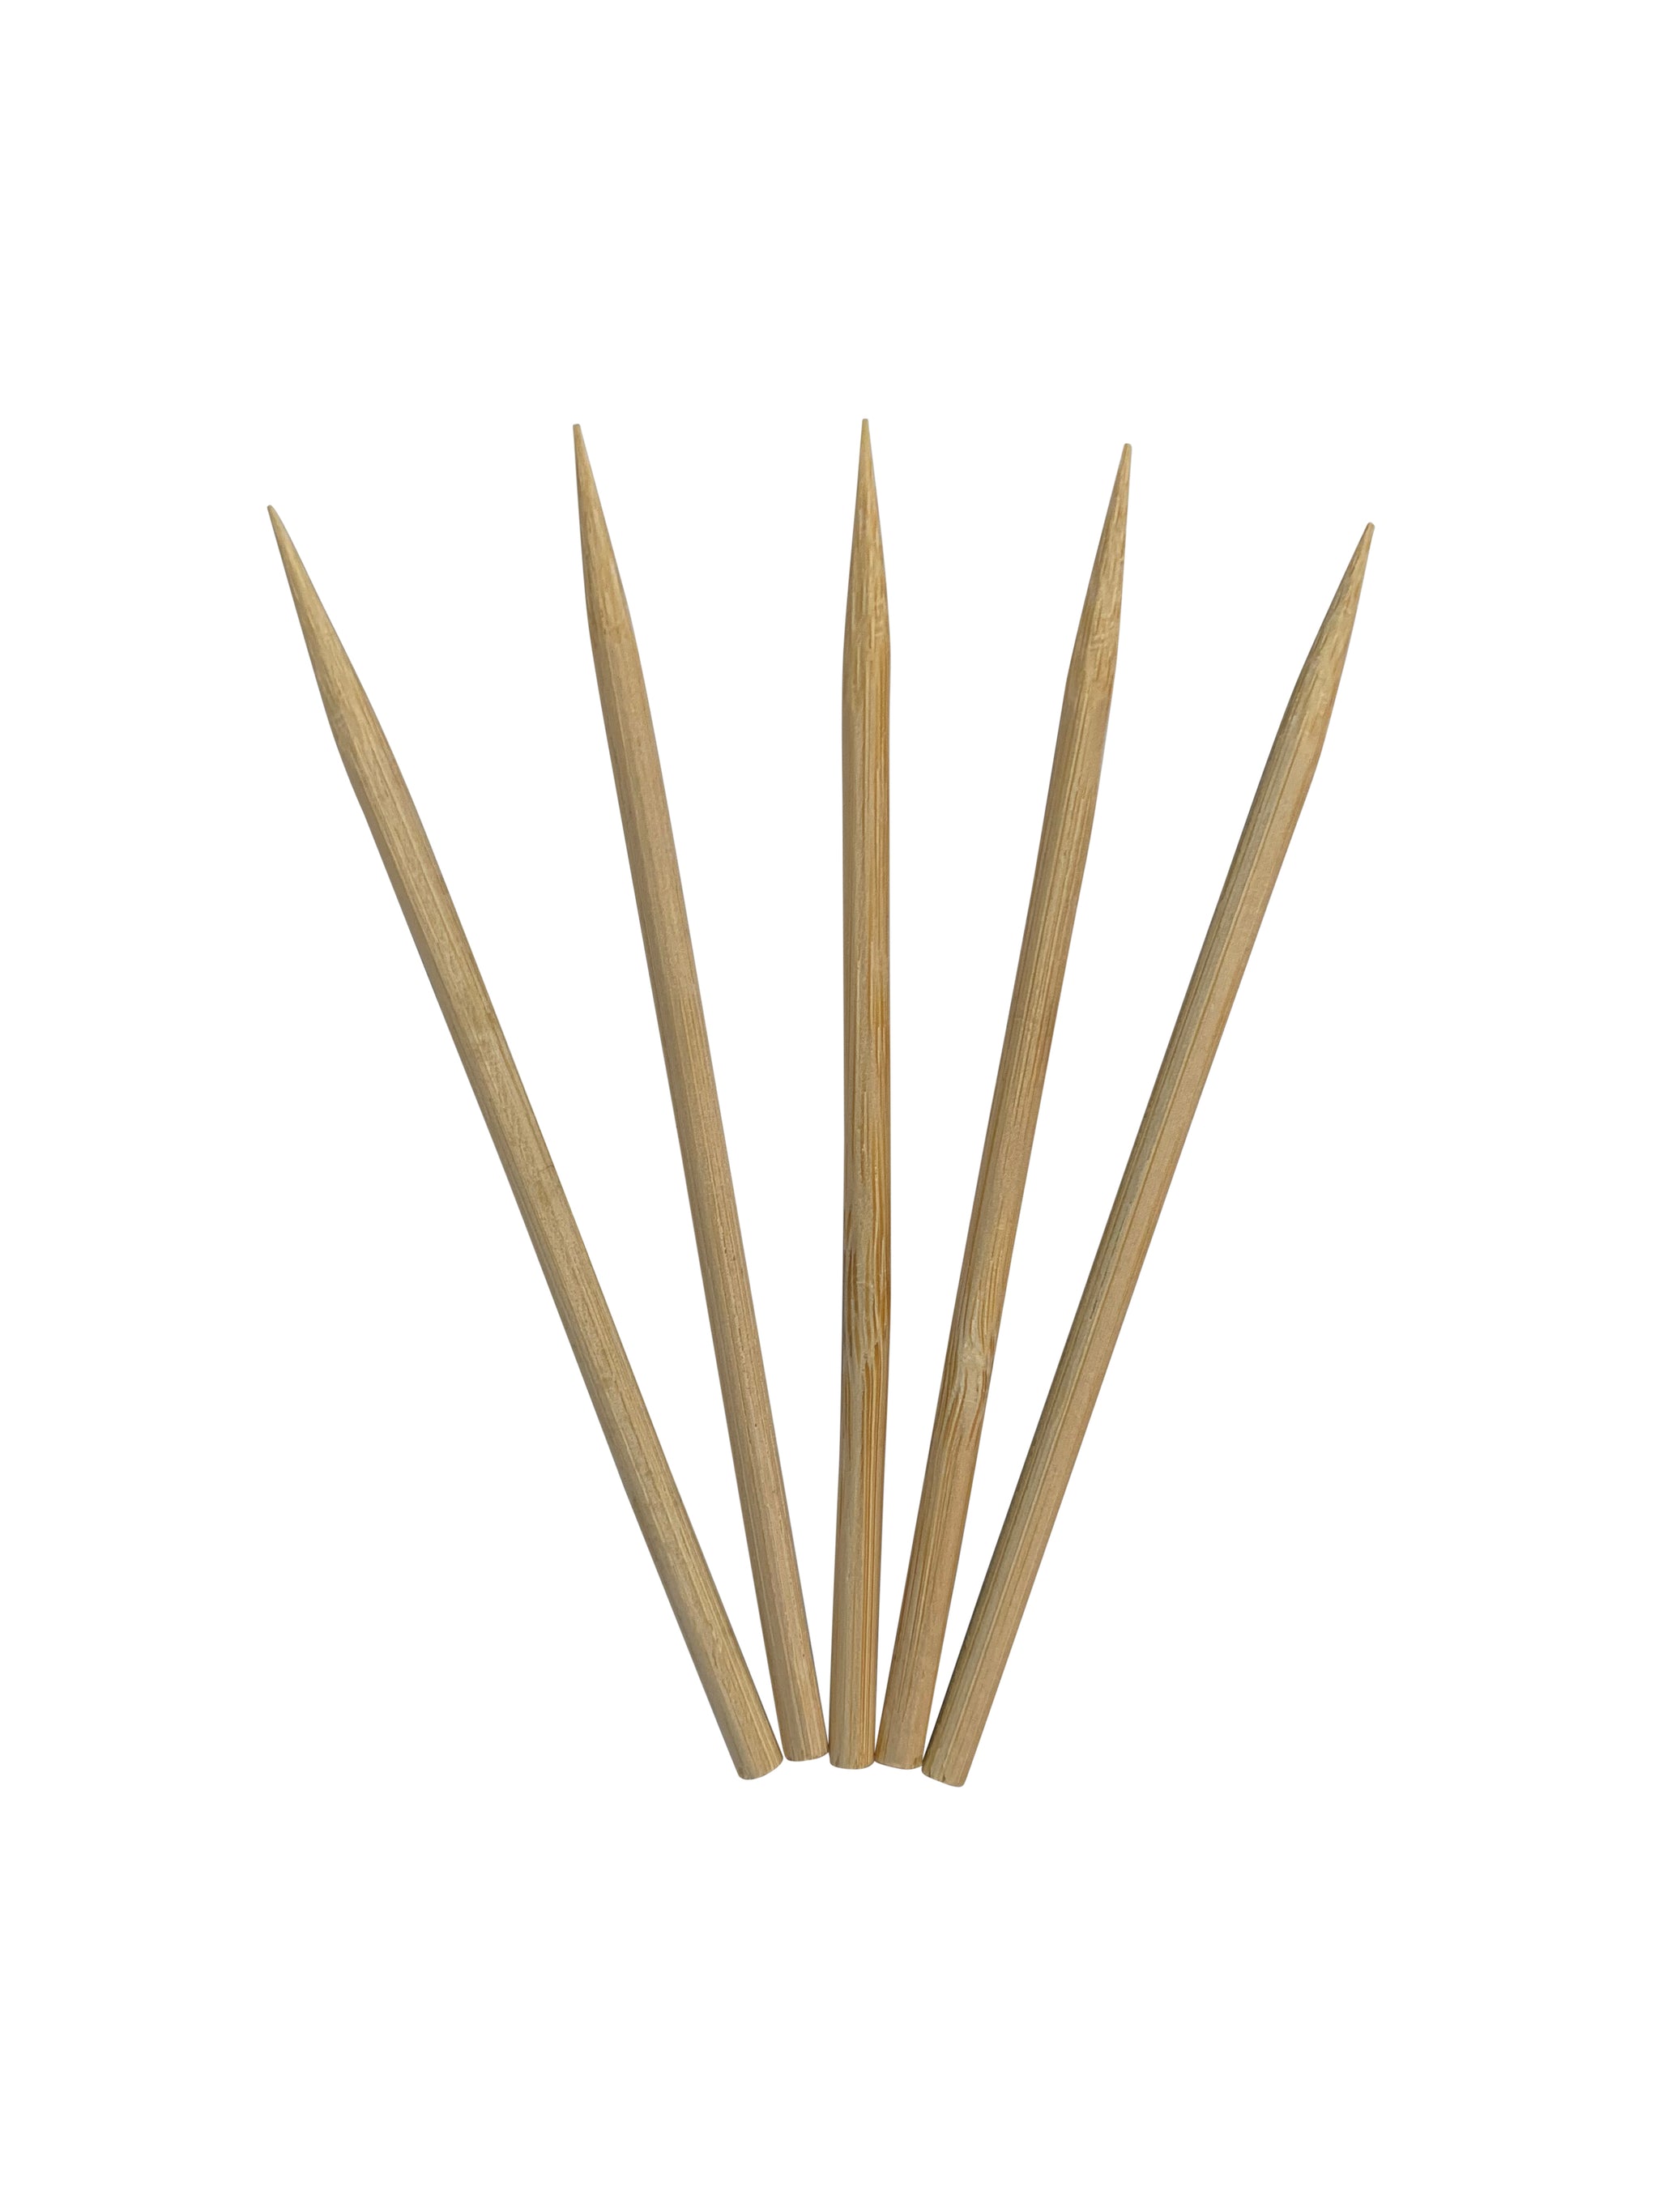 KingSeal Bamboo Grilling Skewers - 9 Inch Length, Bulk Pack